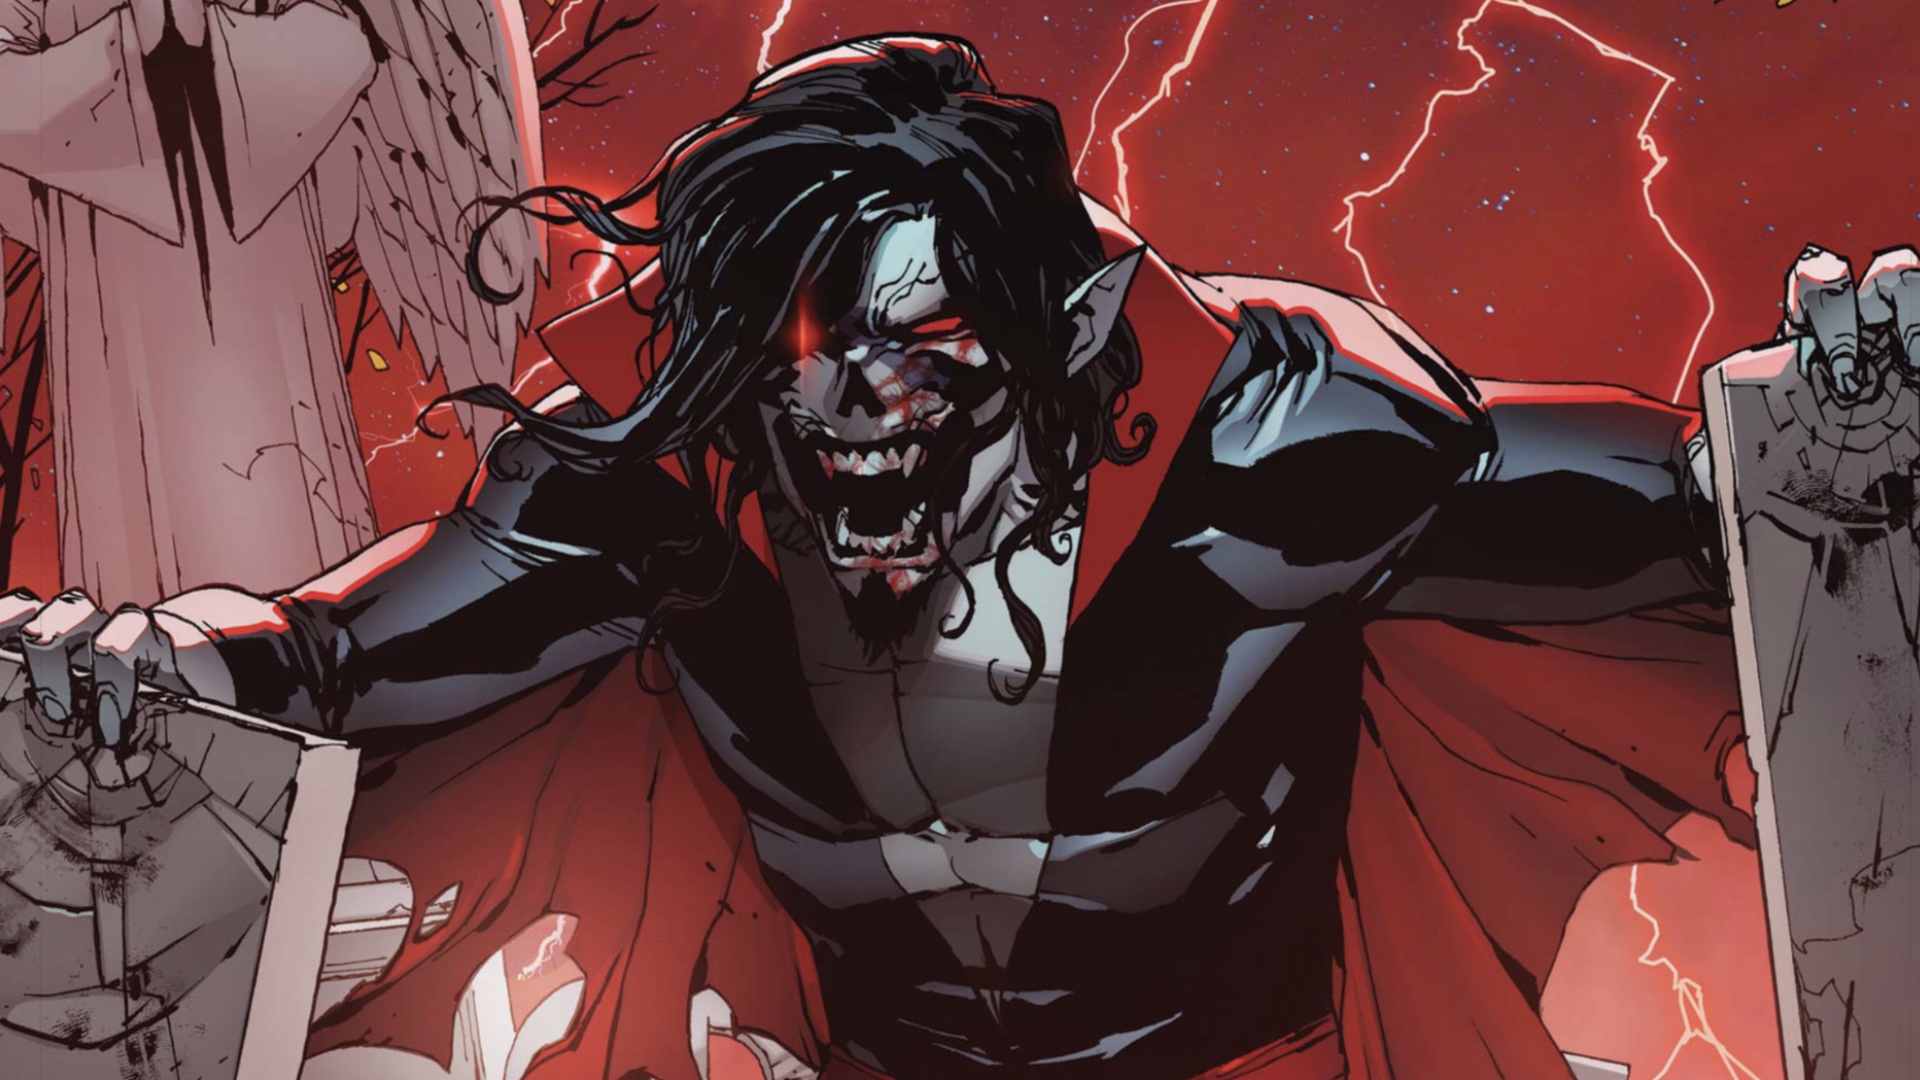 Morbius possess a healing factor